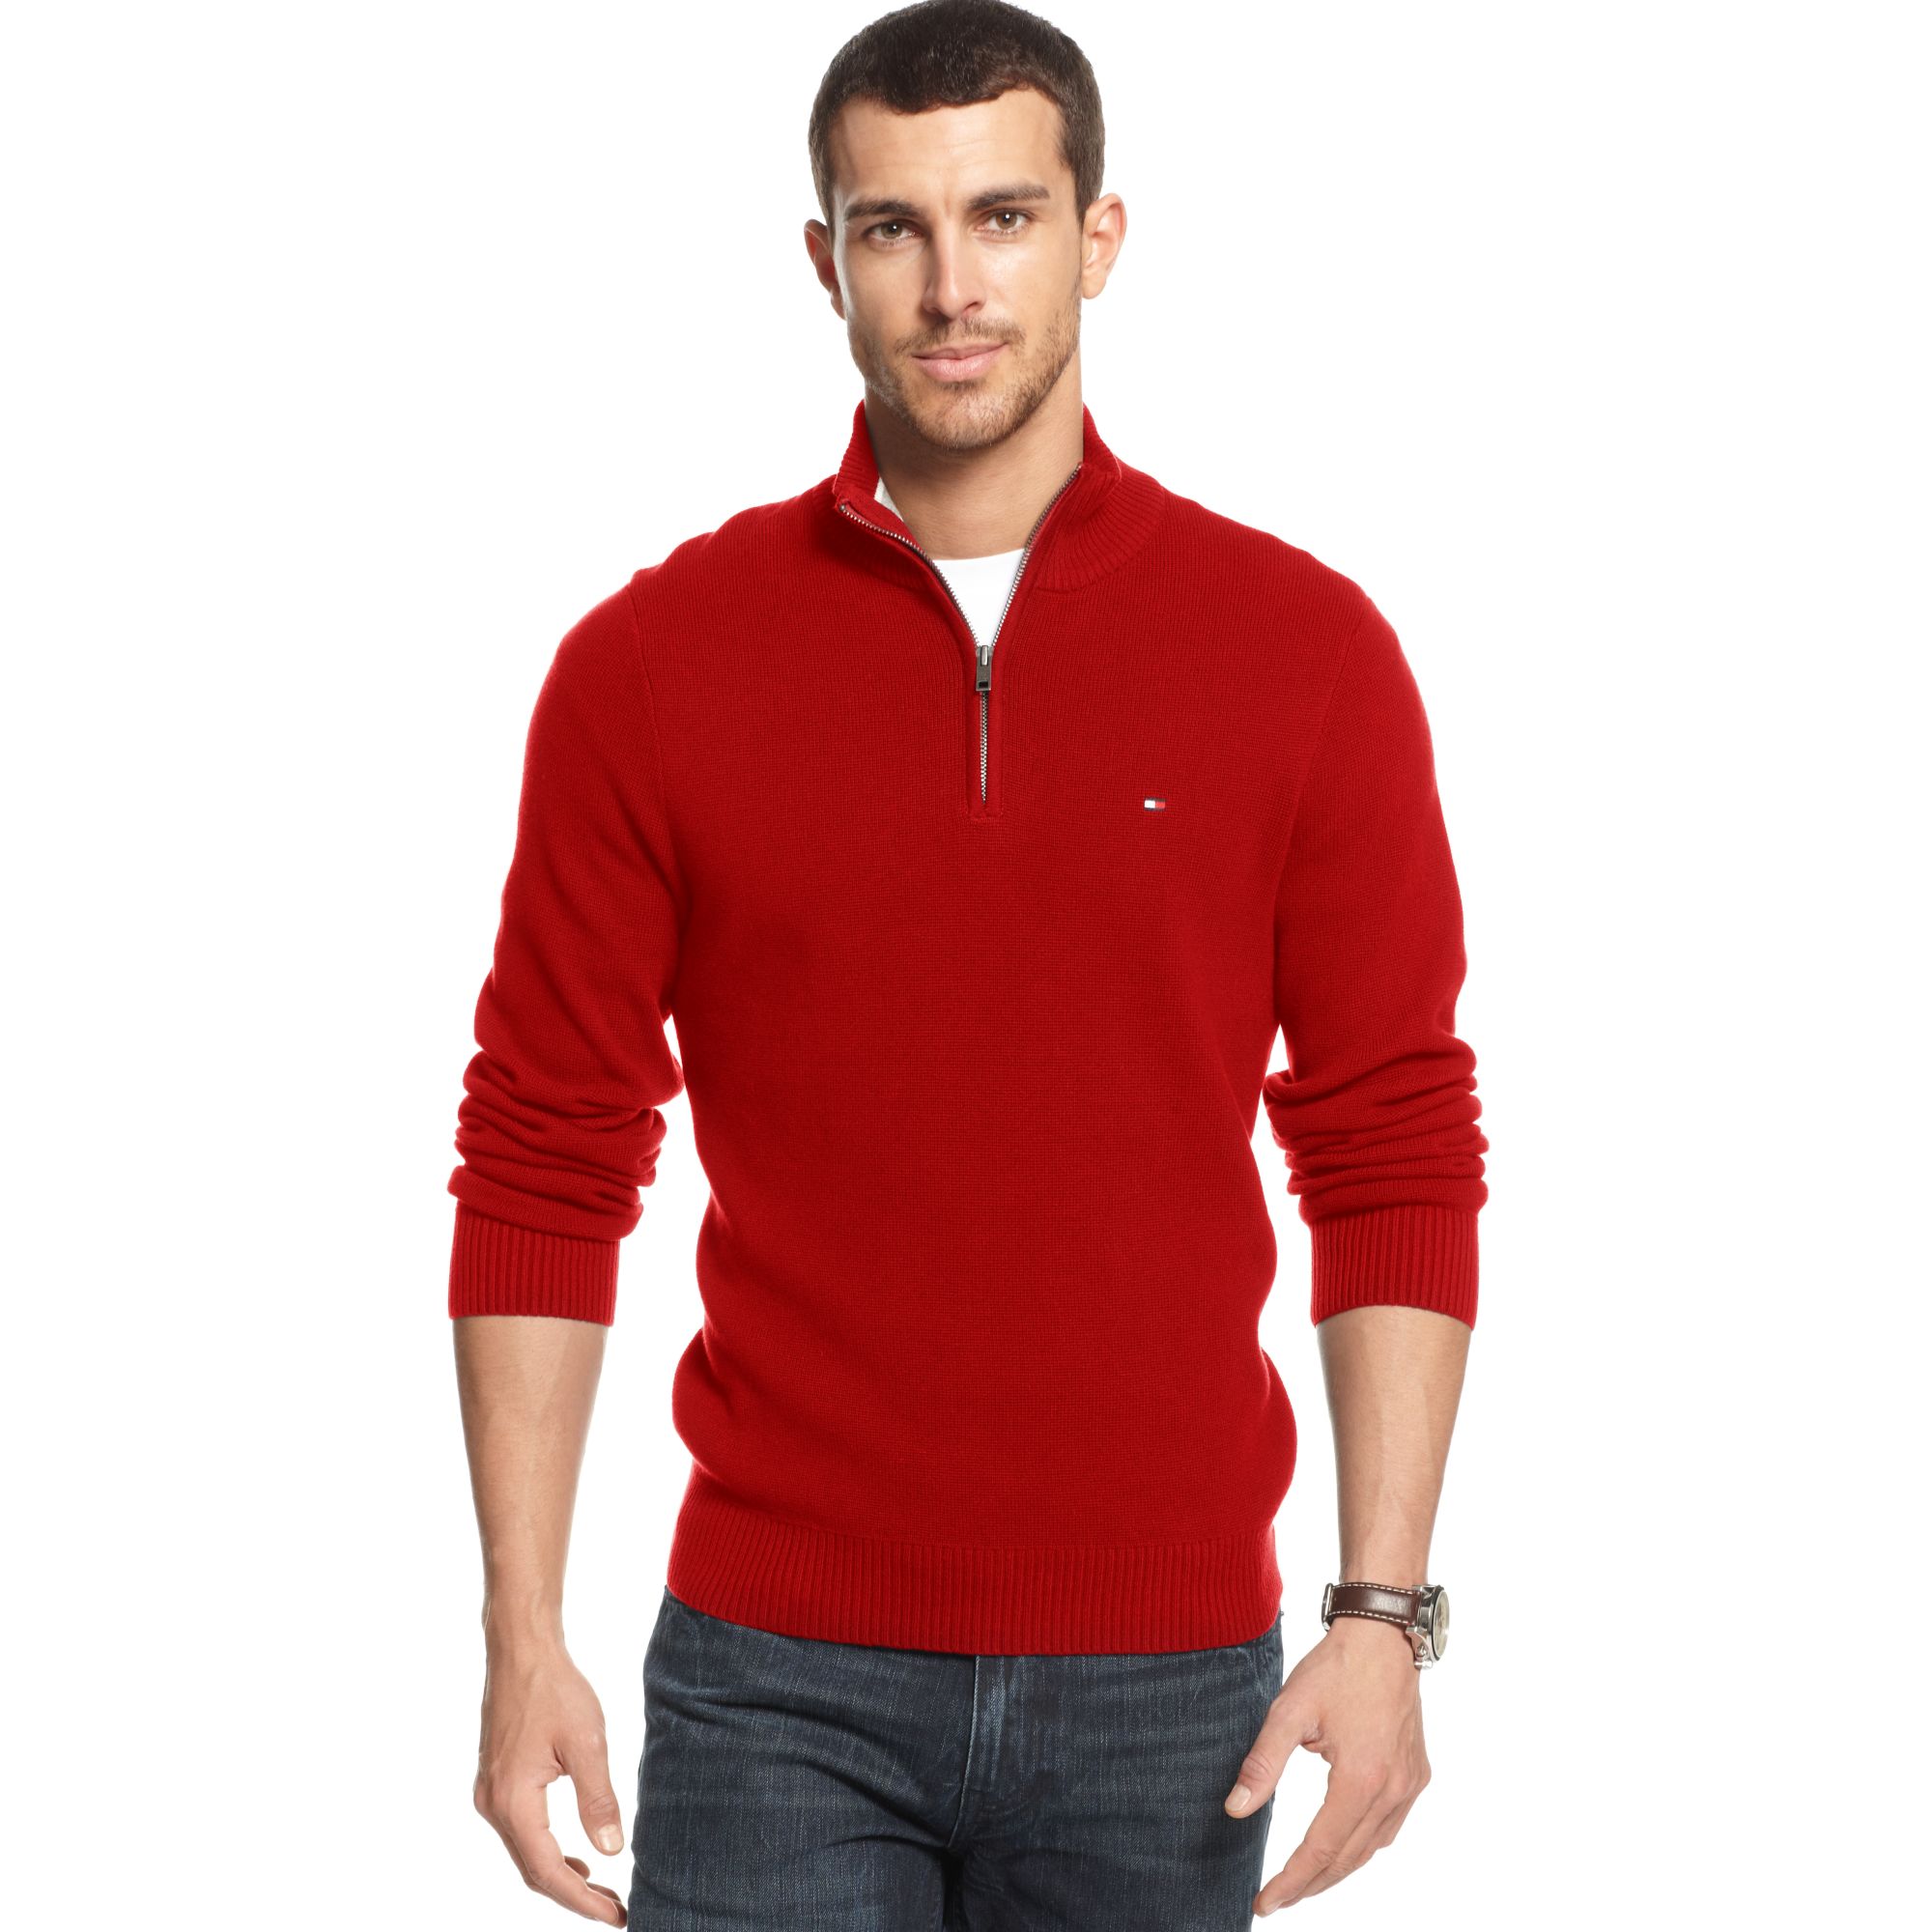 Tommy Hilfiger Adam Quarter Zip Sweater in Red for Men - Lyst